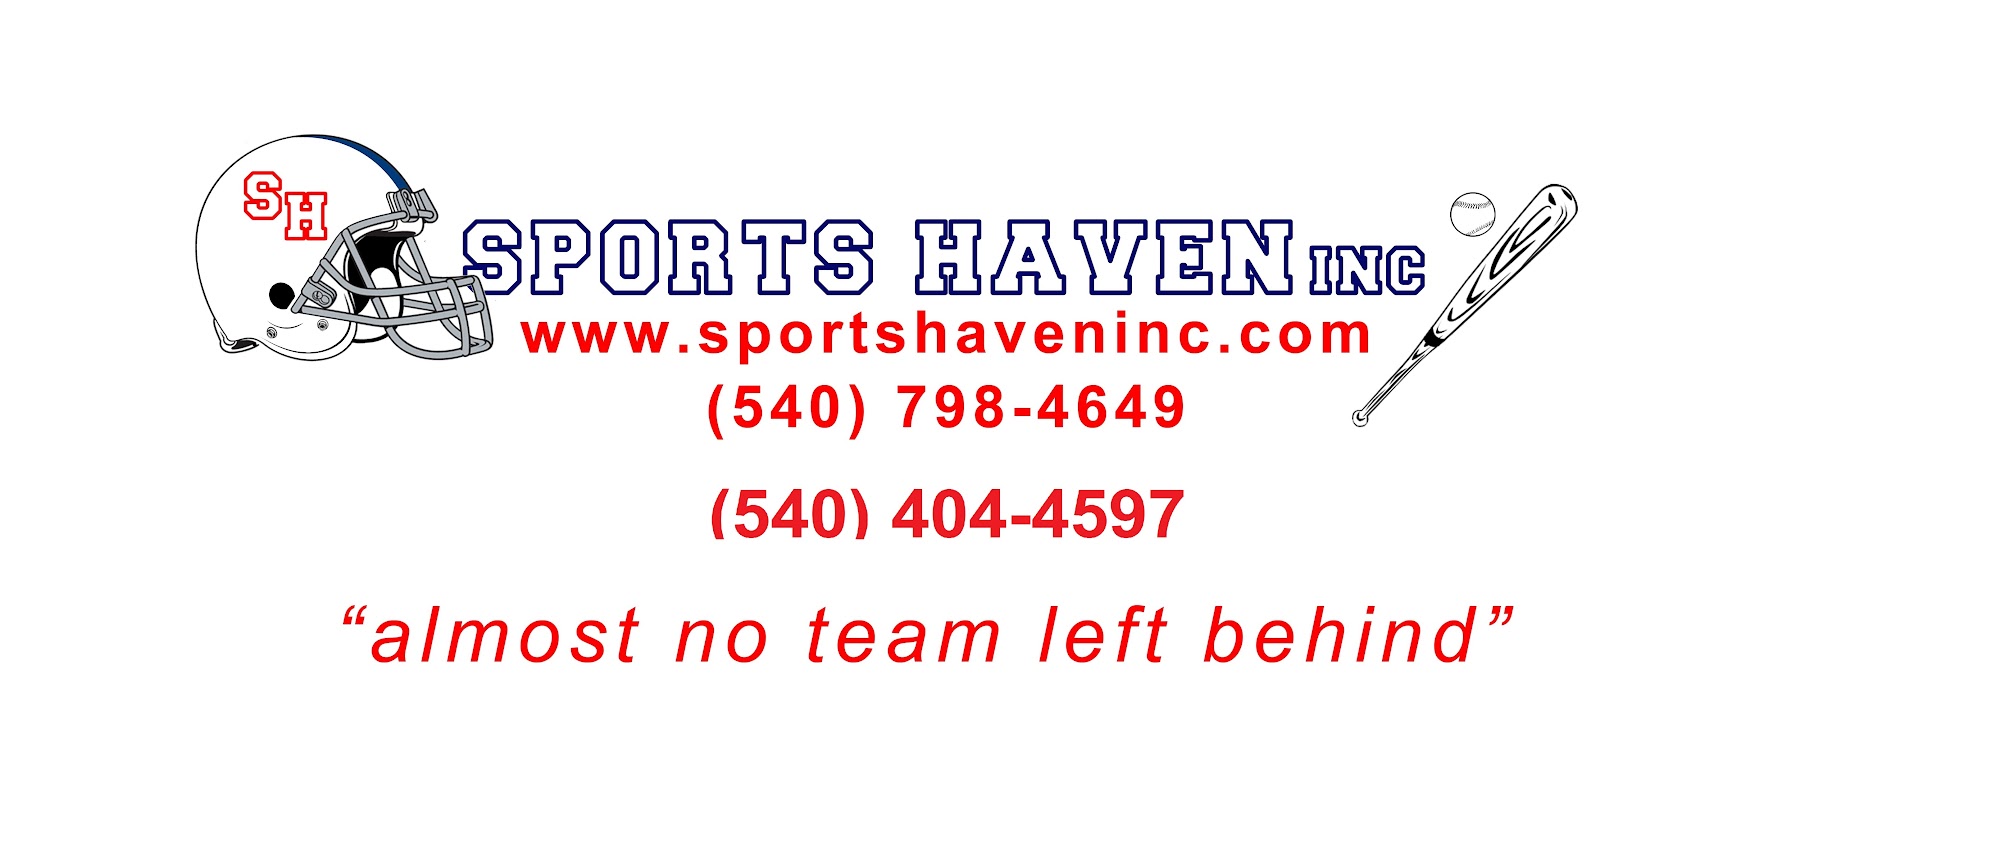 Sports Haven Inc